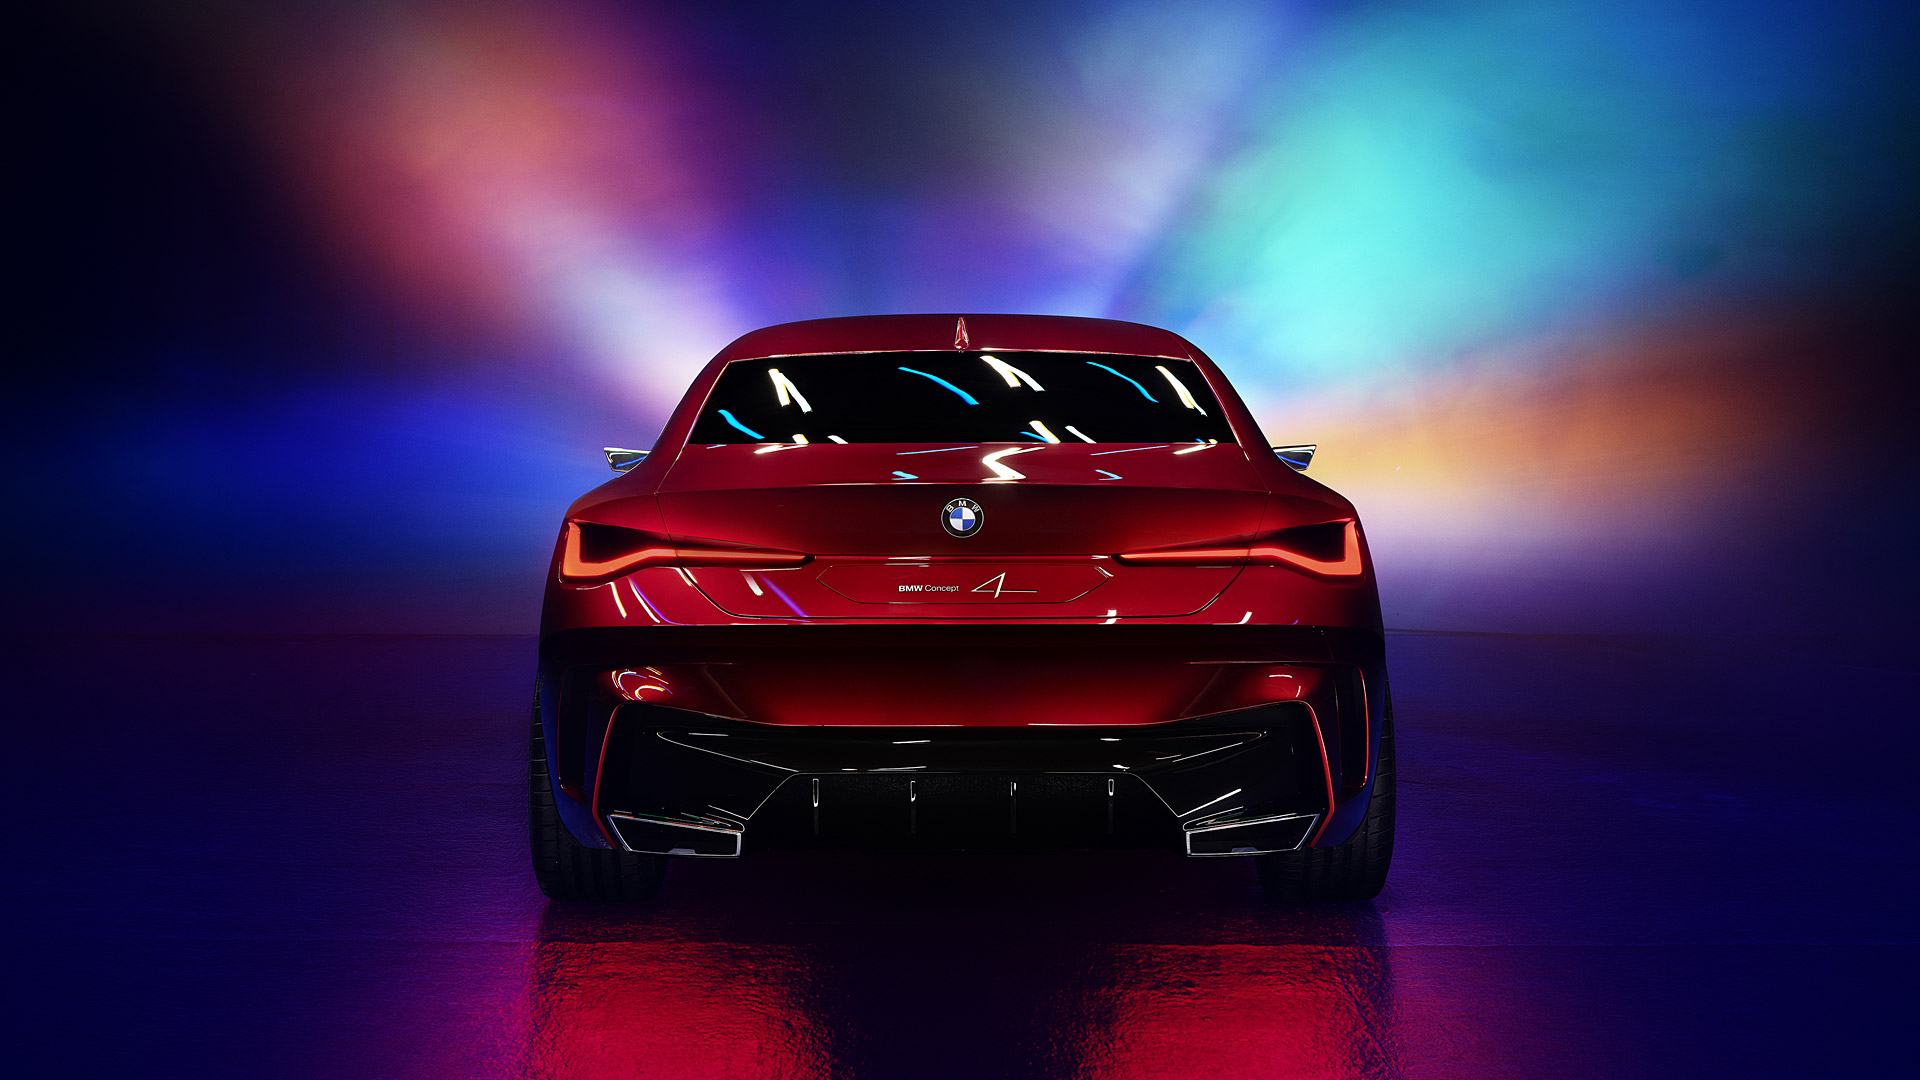  2019 BMW Concept 4 Wallpaper.